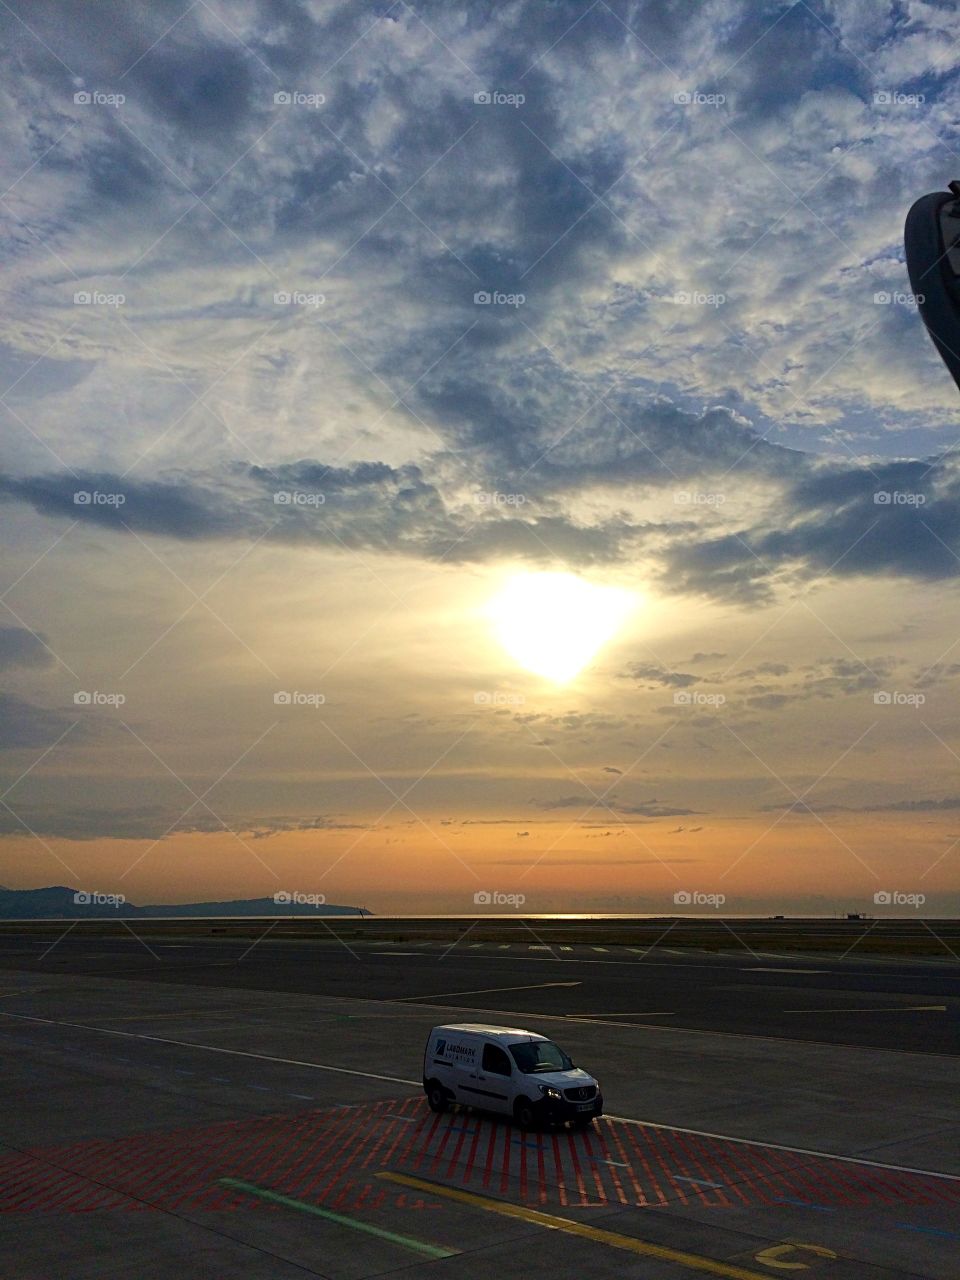 Sunrise at Nice Airport